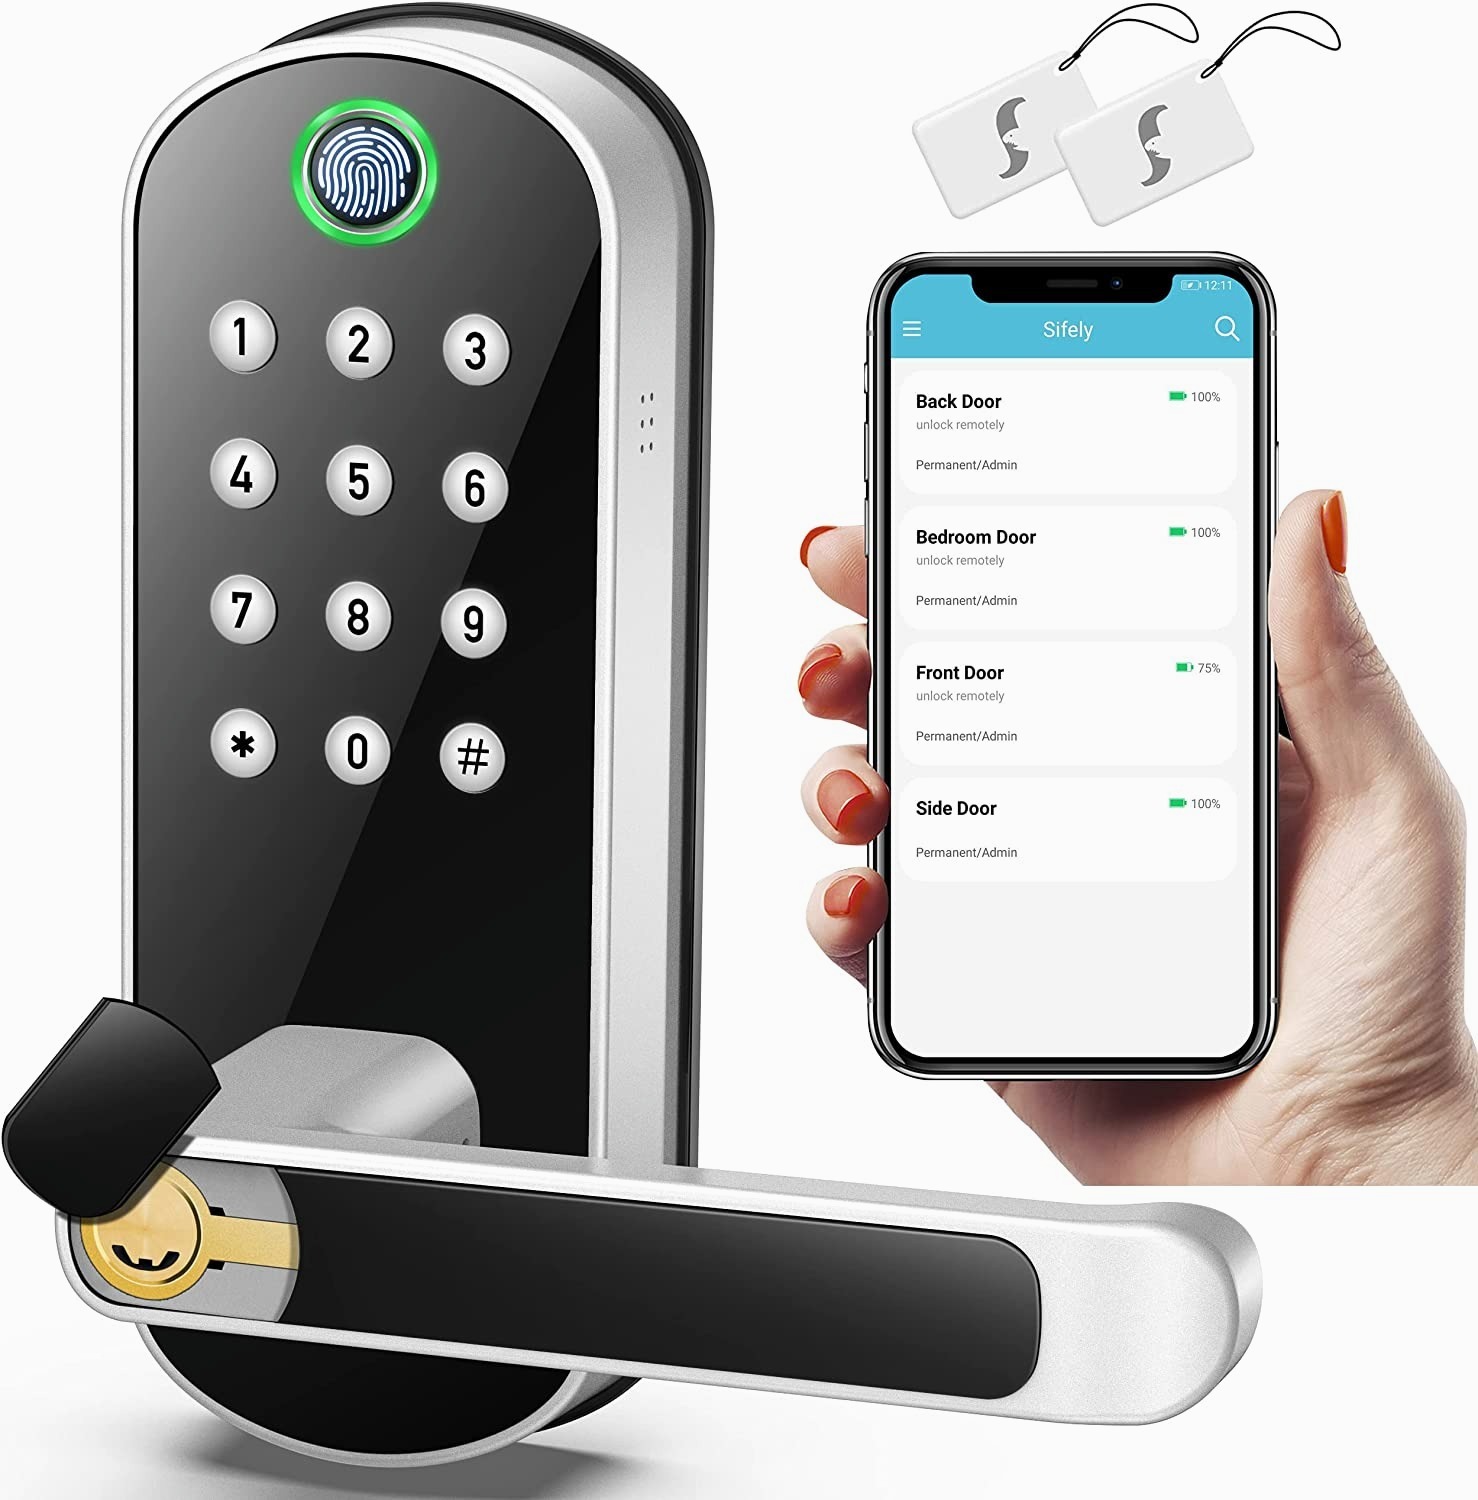 Sifely Keyless Entry Smart Door Lock w/ Fingerprint/Biometric Lock $78.80 + Free S/H